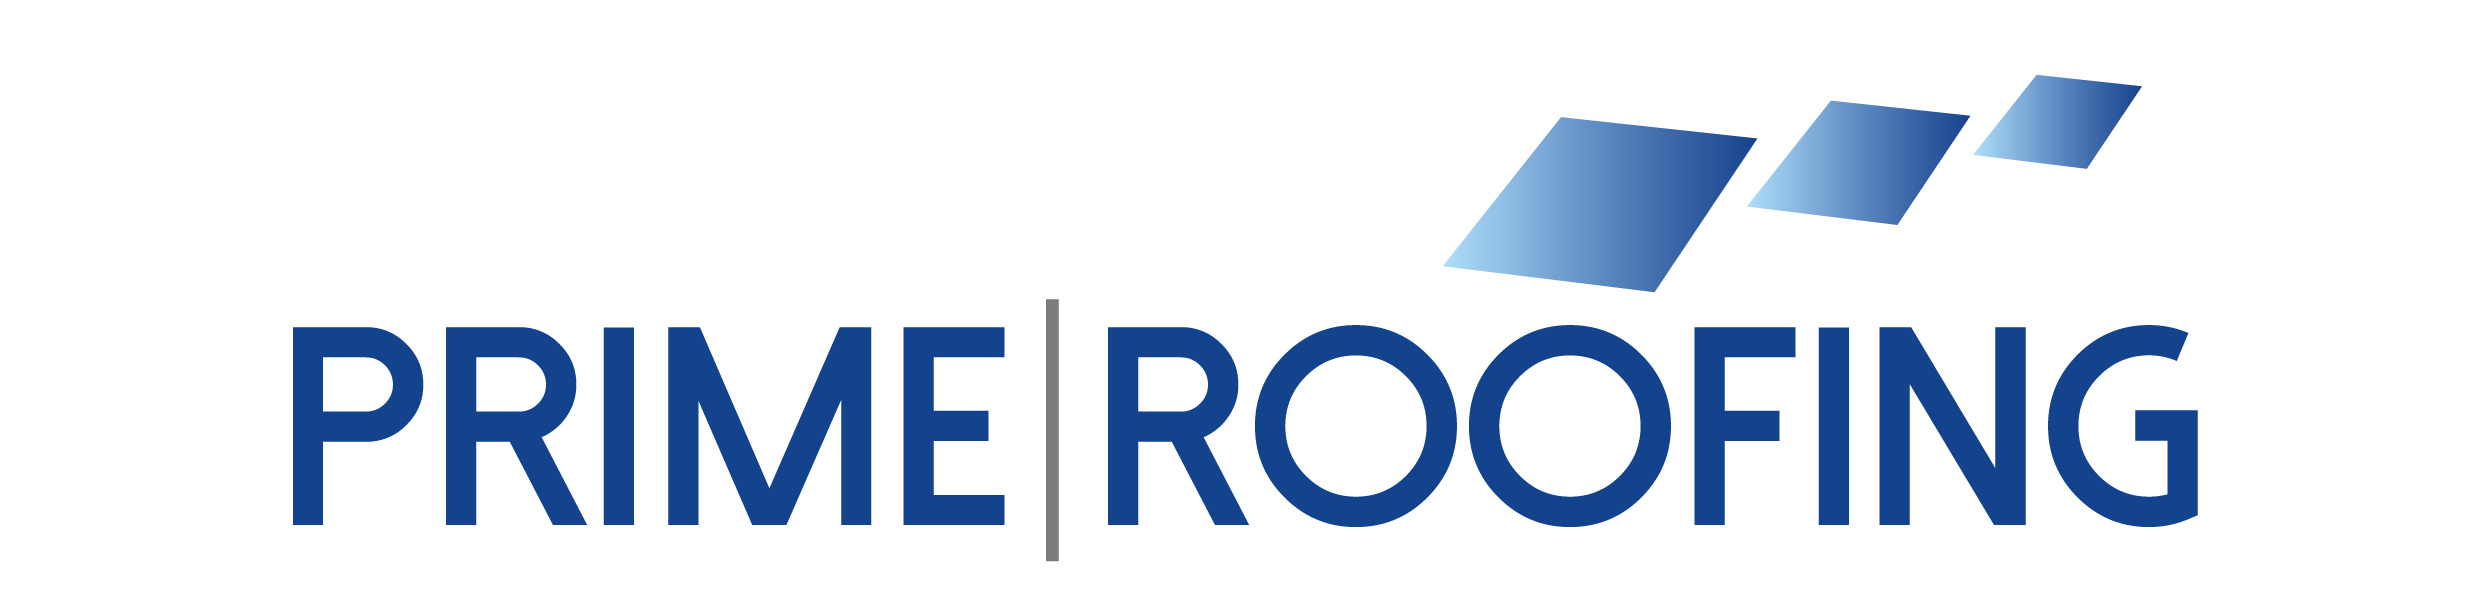 Prime Roofing Logo June 192